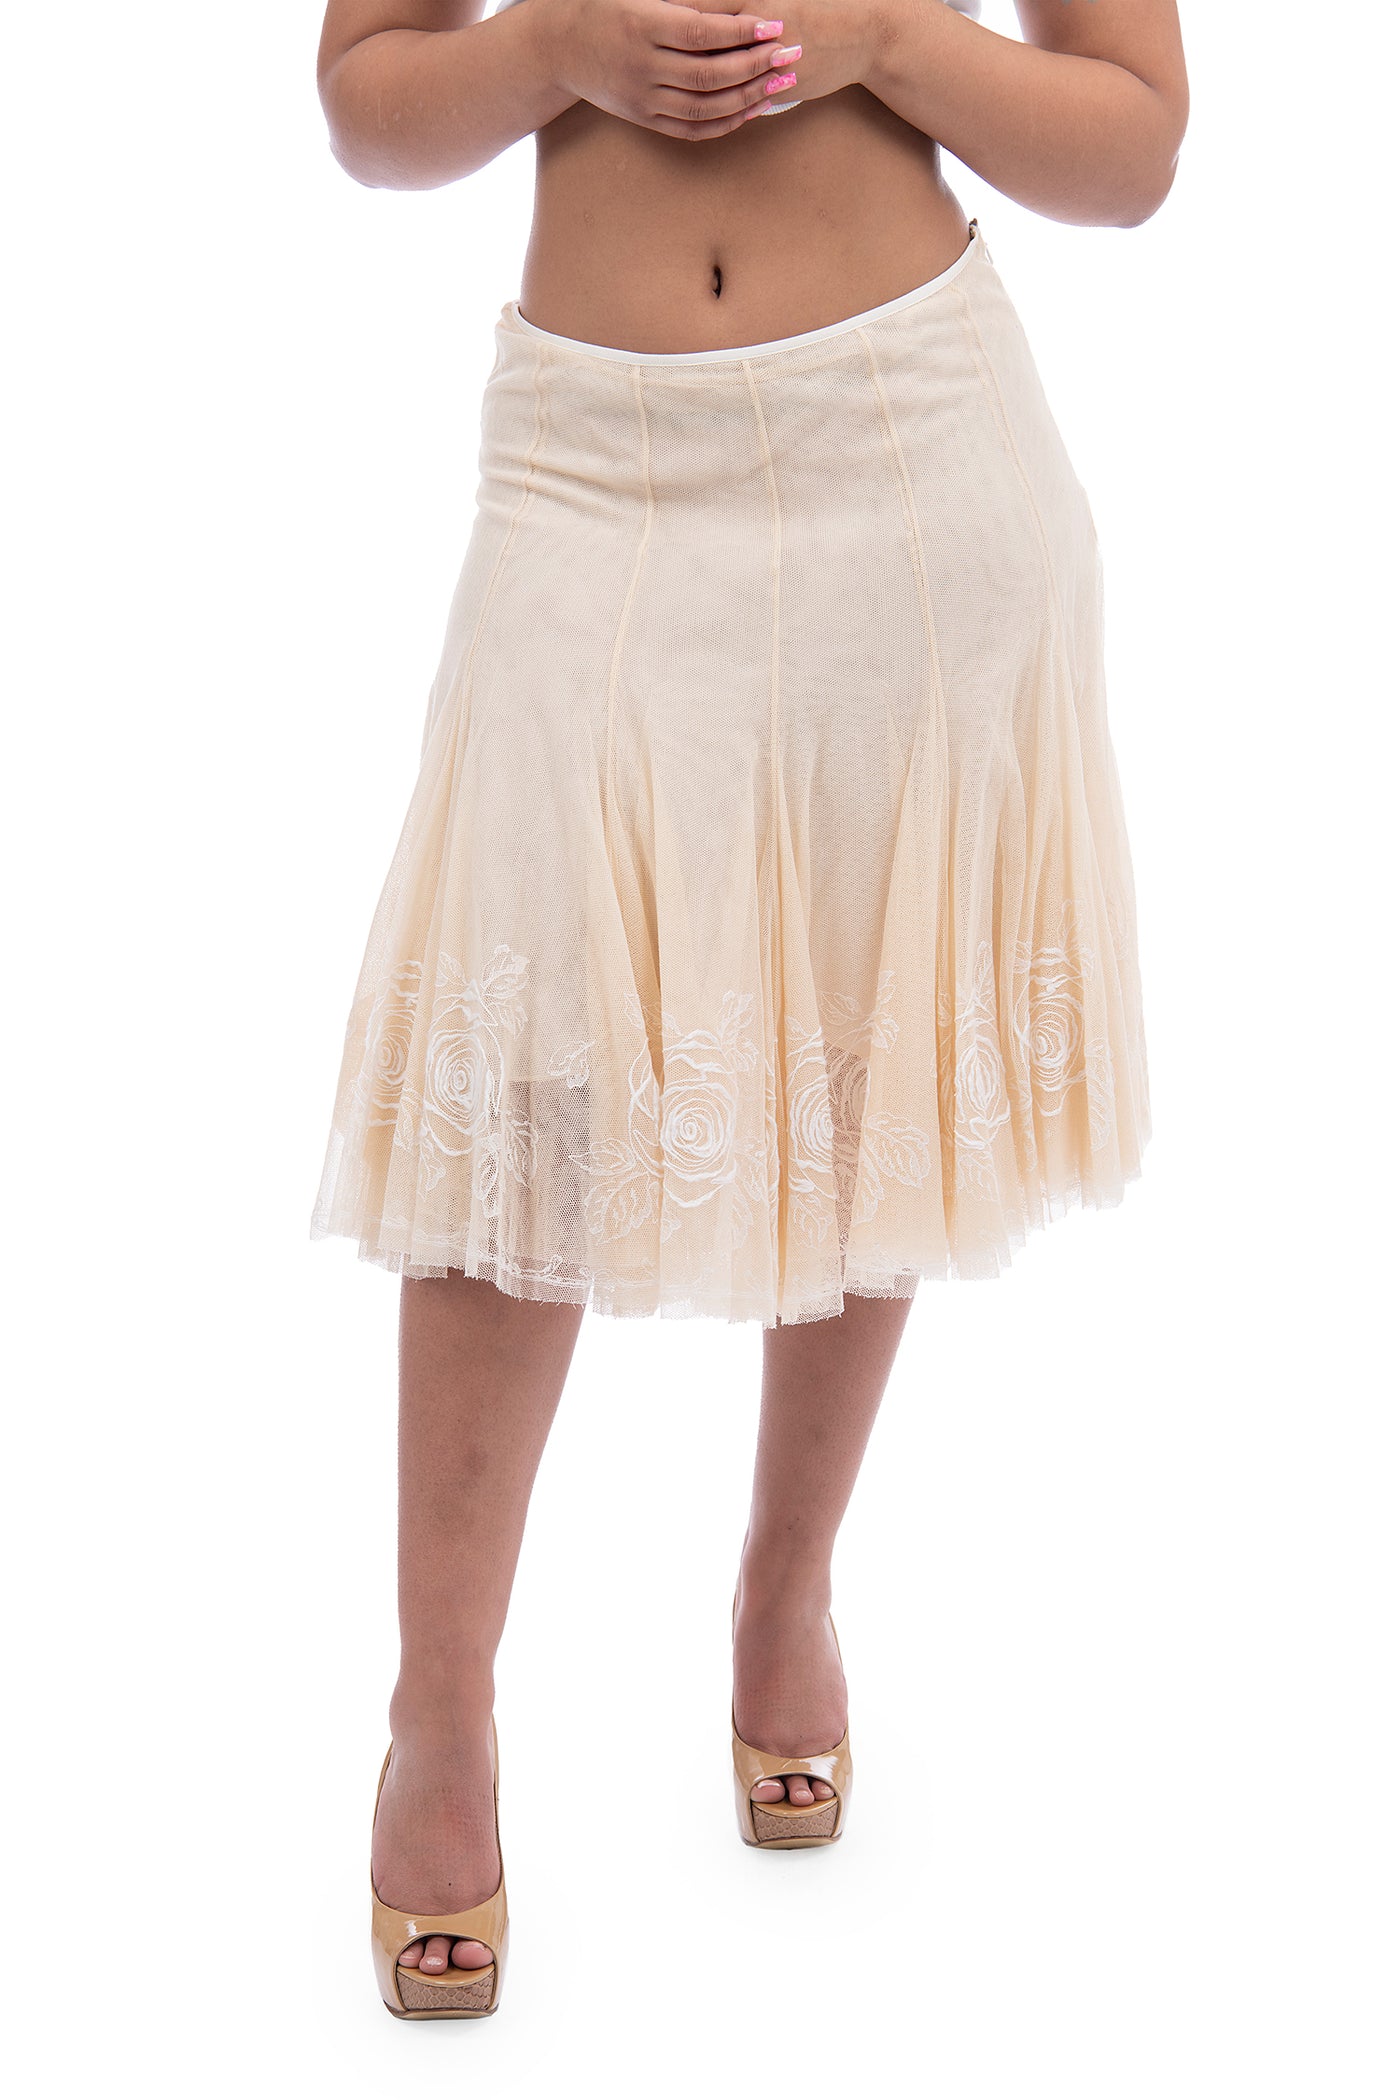 Ralph Lauren, beige embroidered tulle skirt, brand new